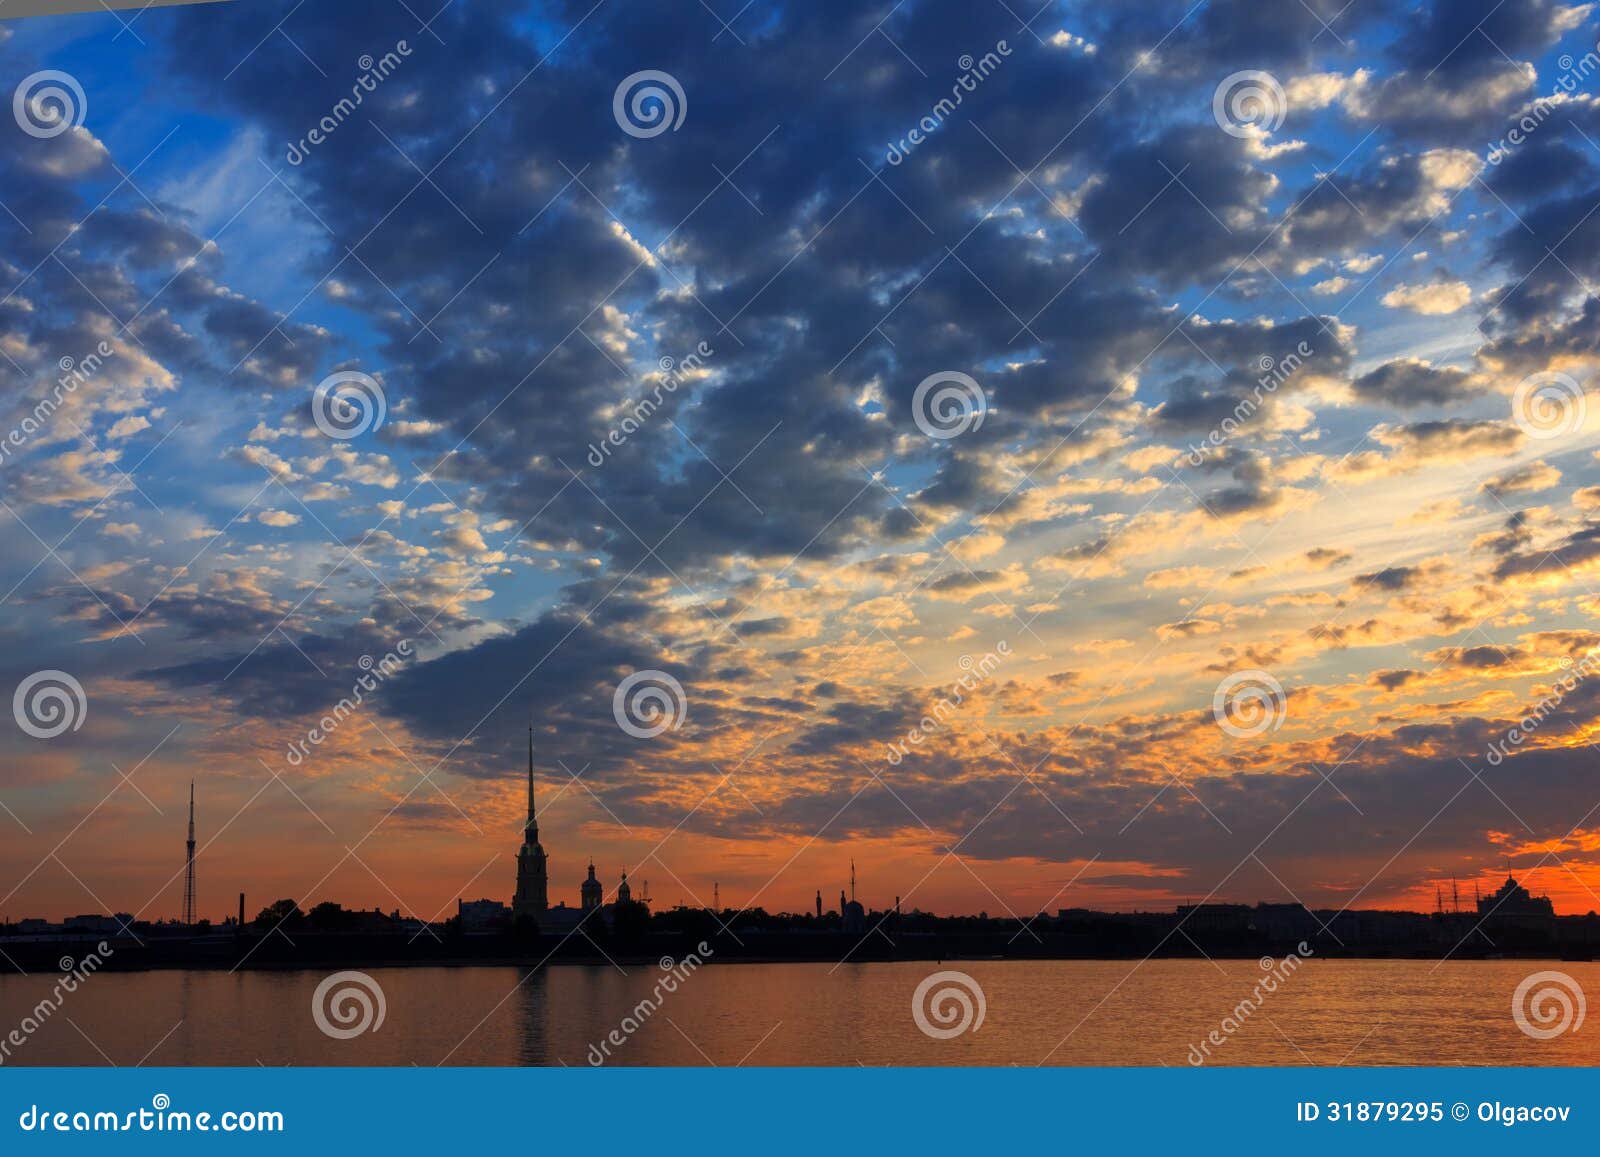 a beautiful sunrise over the neva river, saint-petersburg, russia